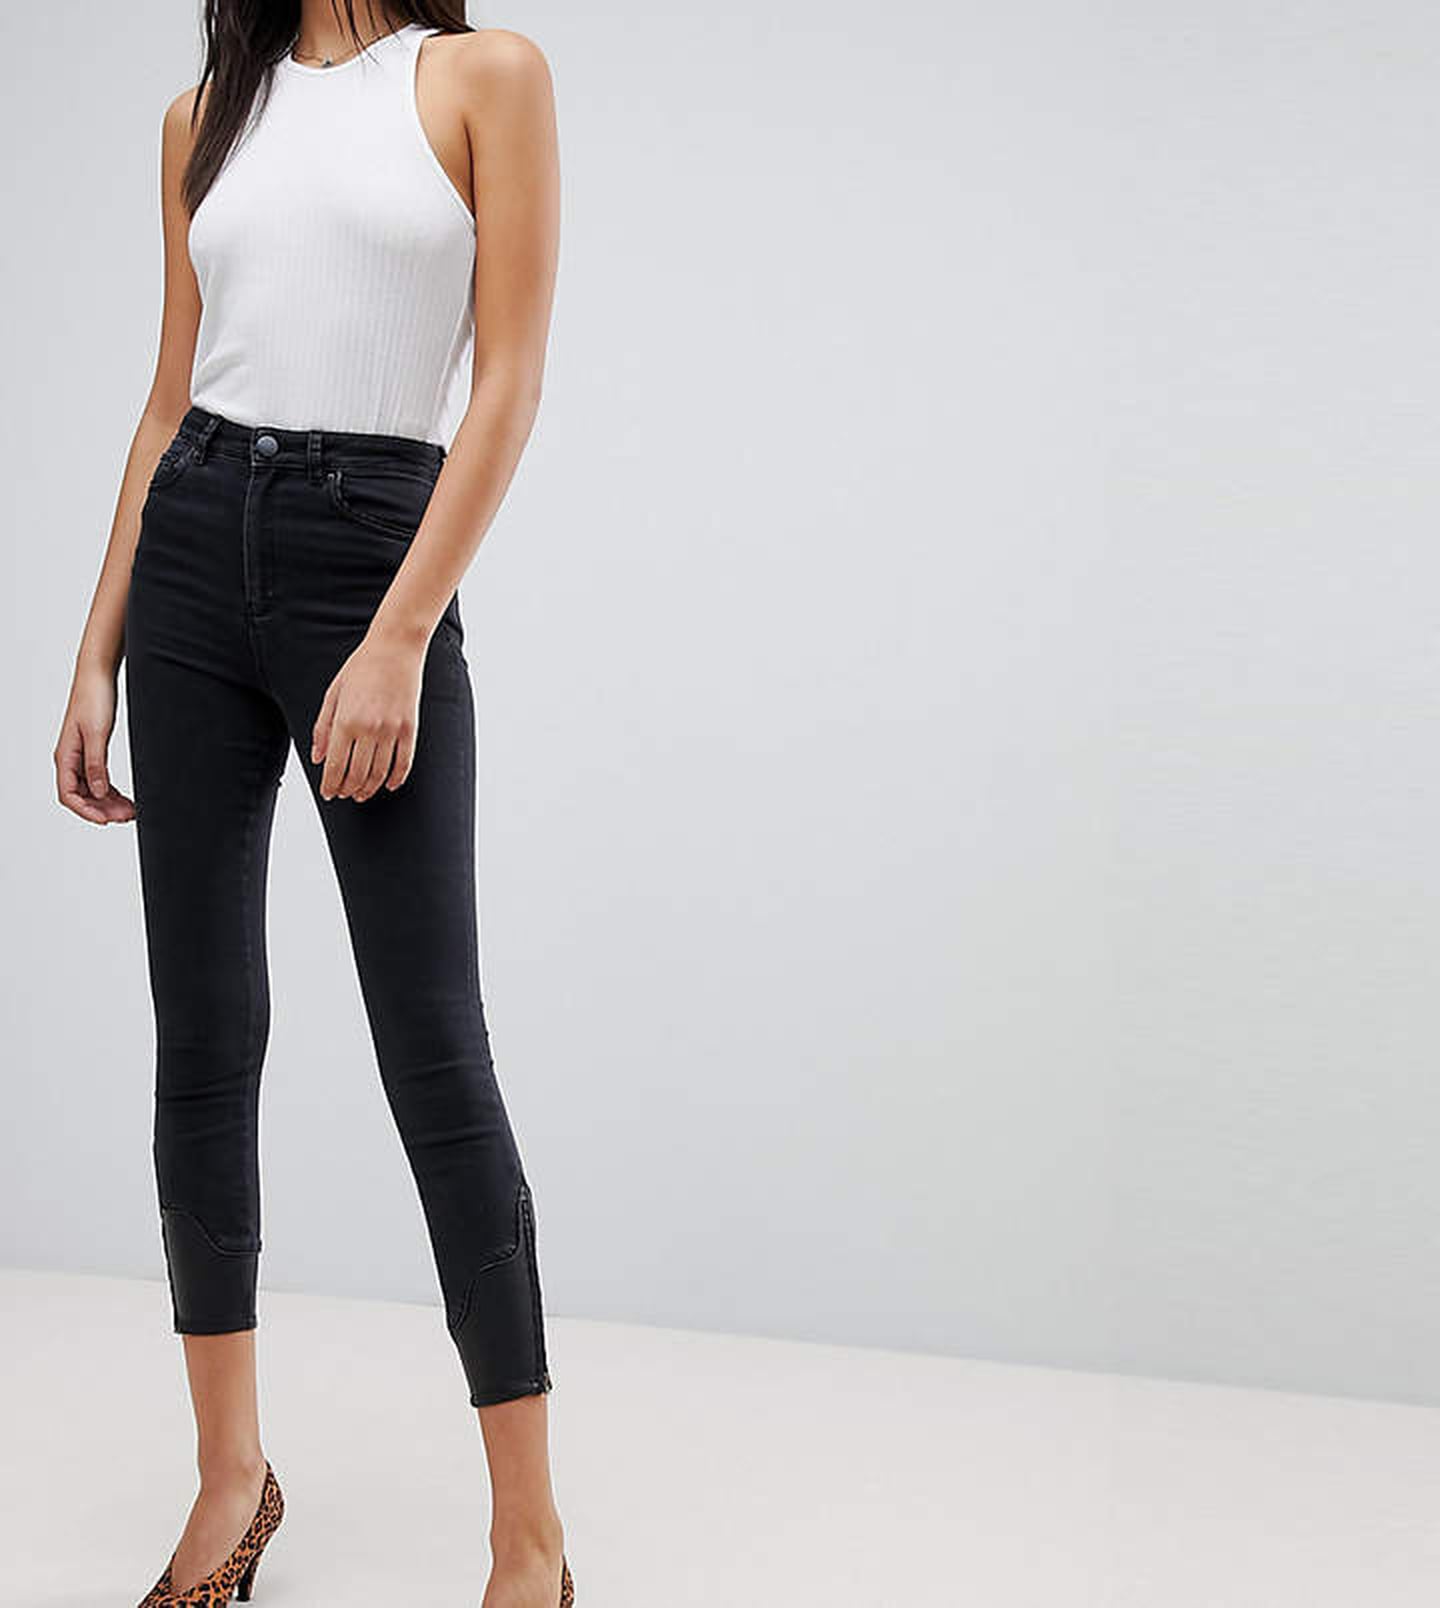 Meghan Markle's Hiut Jeans | POPSUGAR Fashion